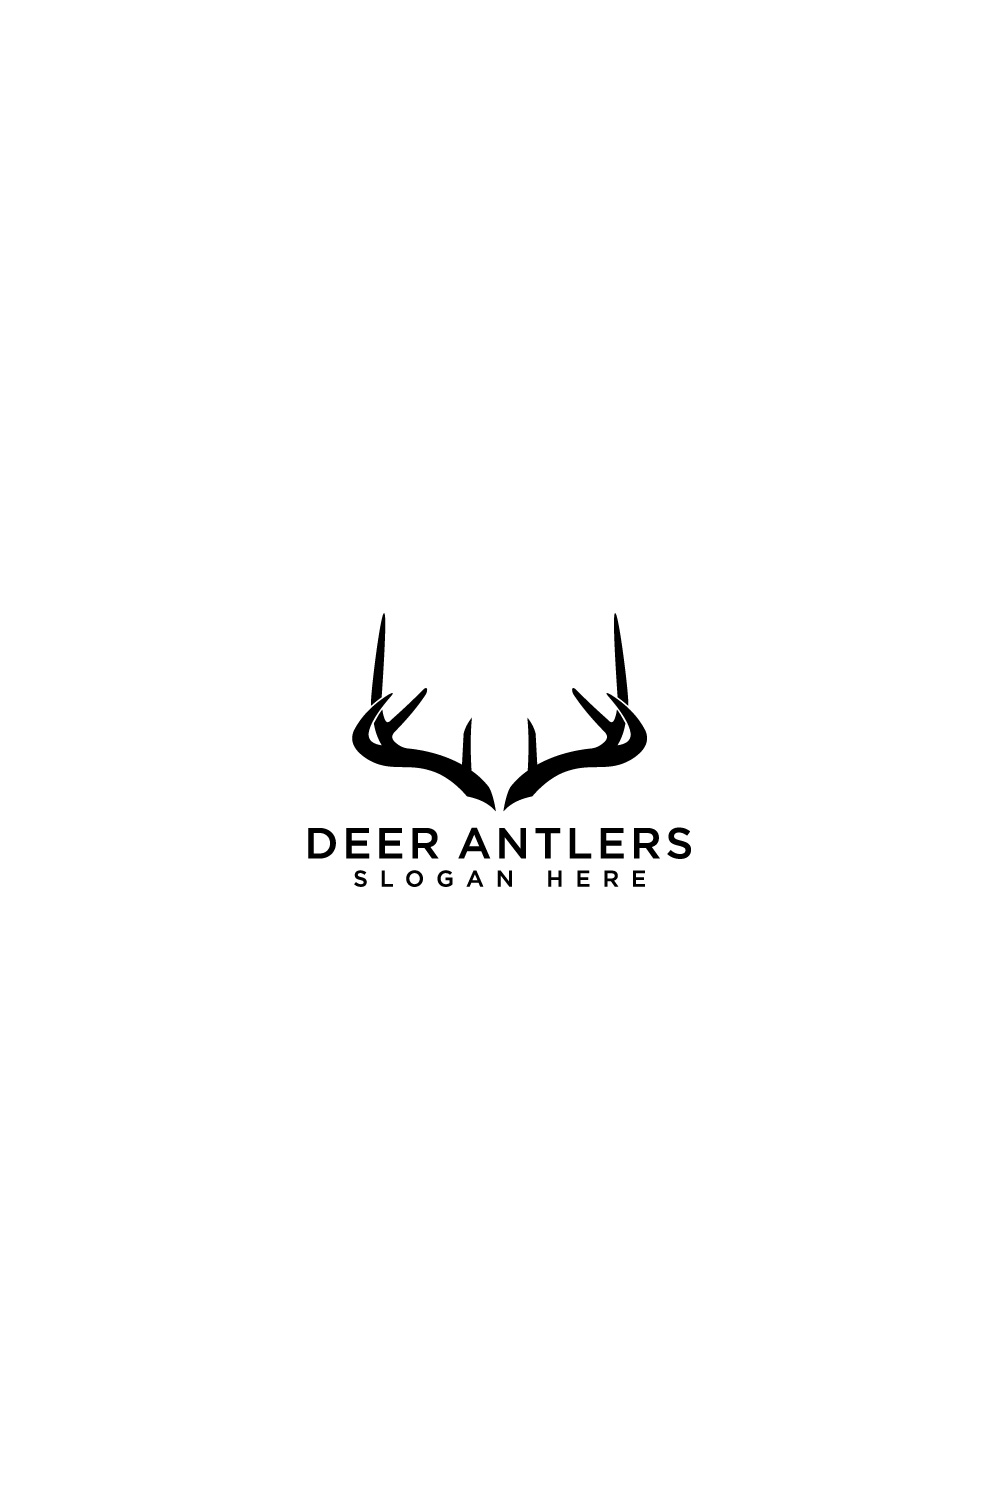 deer antlers vecot design pinterest preview image.